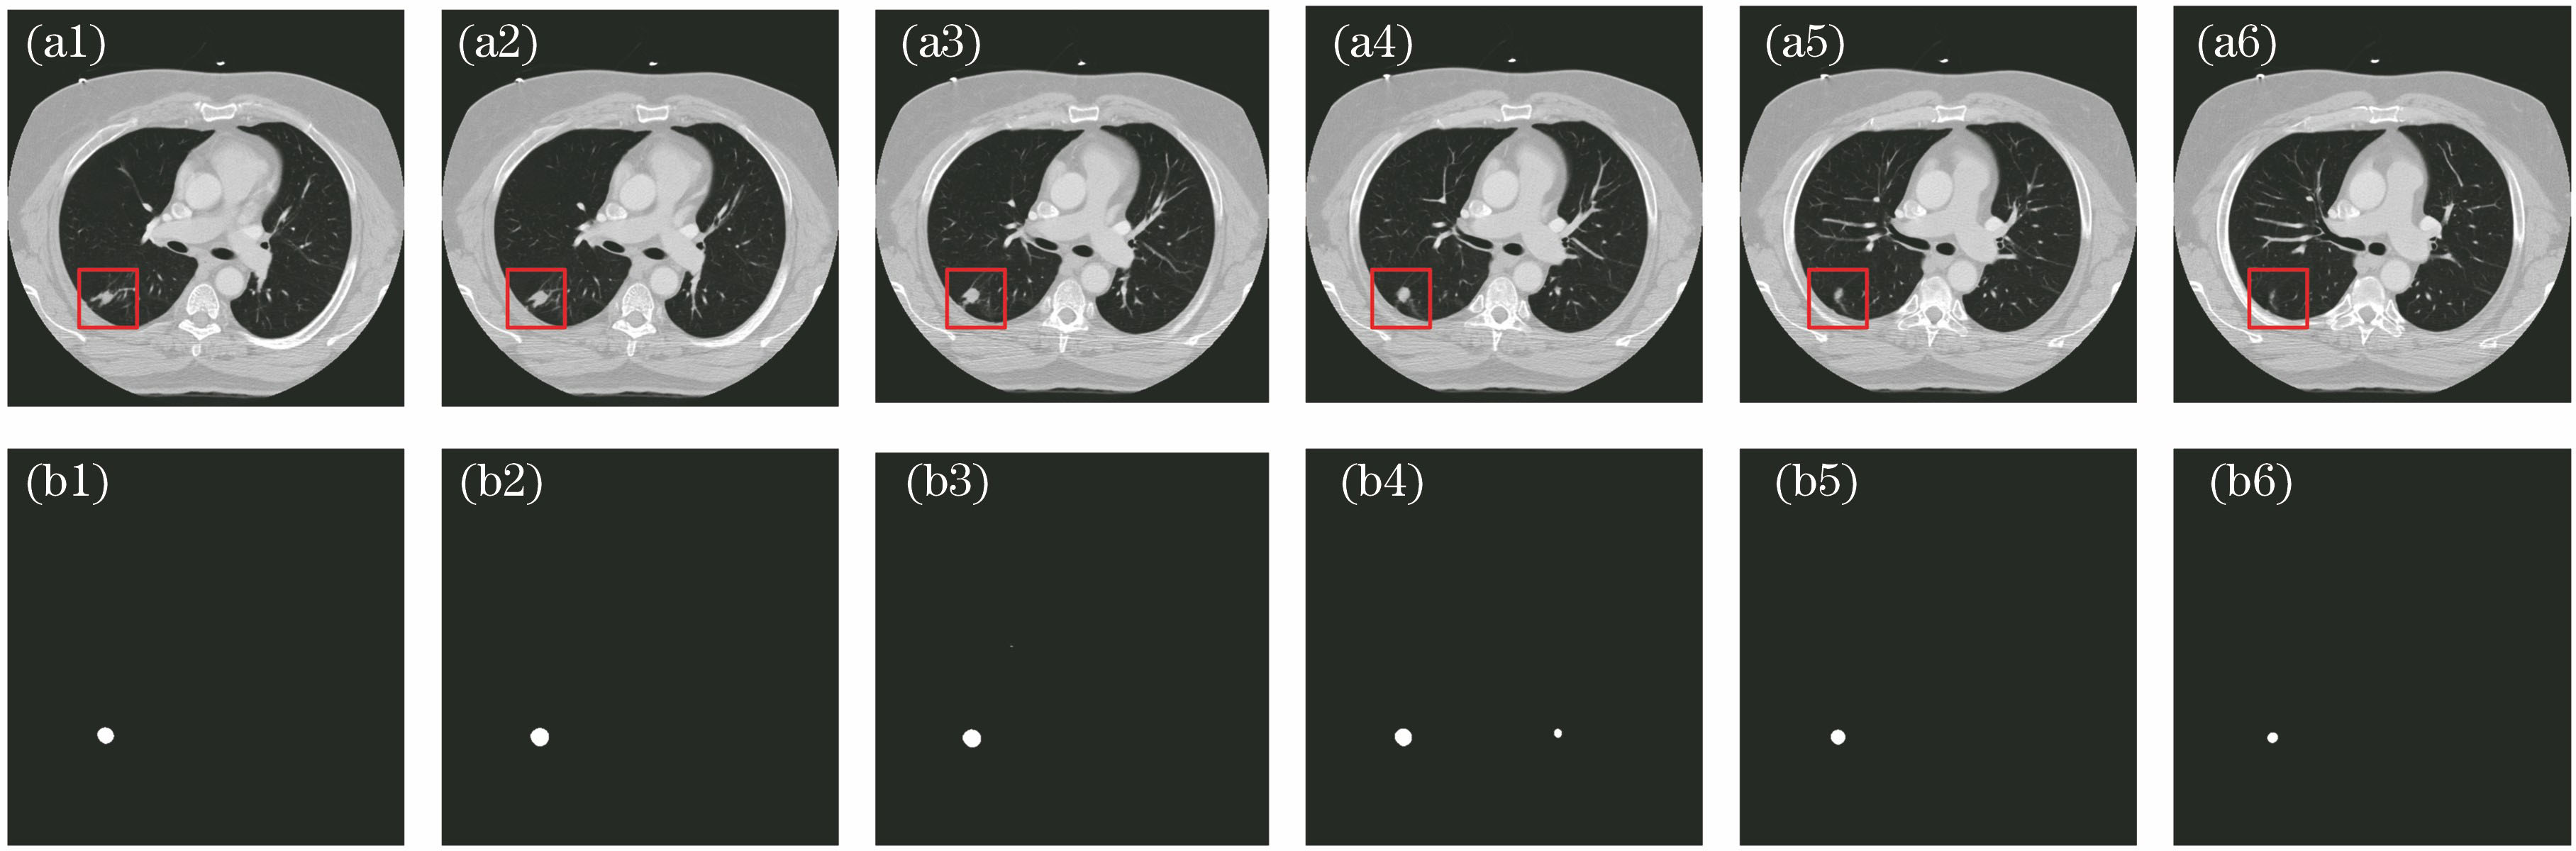 CT slice original images and U-net prediction images. (a) Original images; (b) prediction images